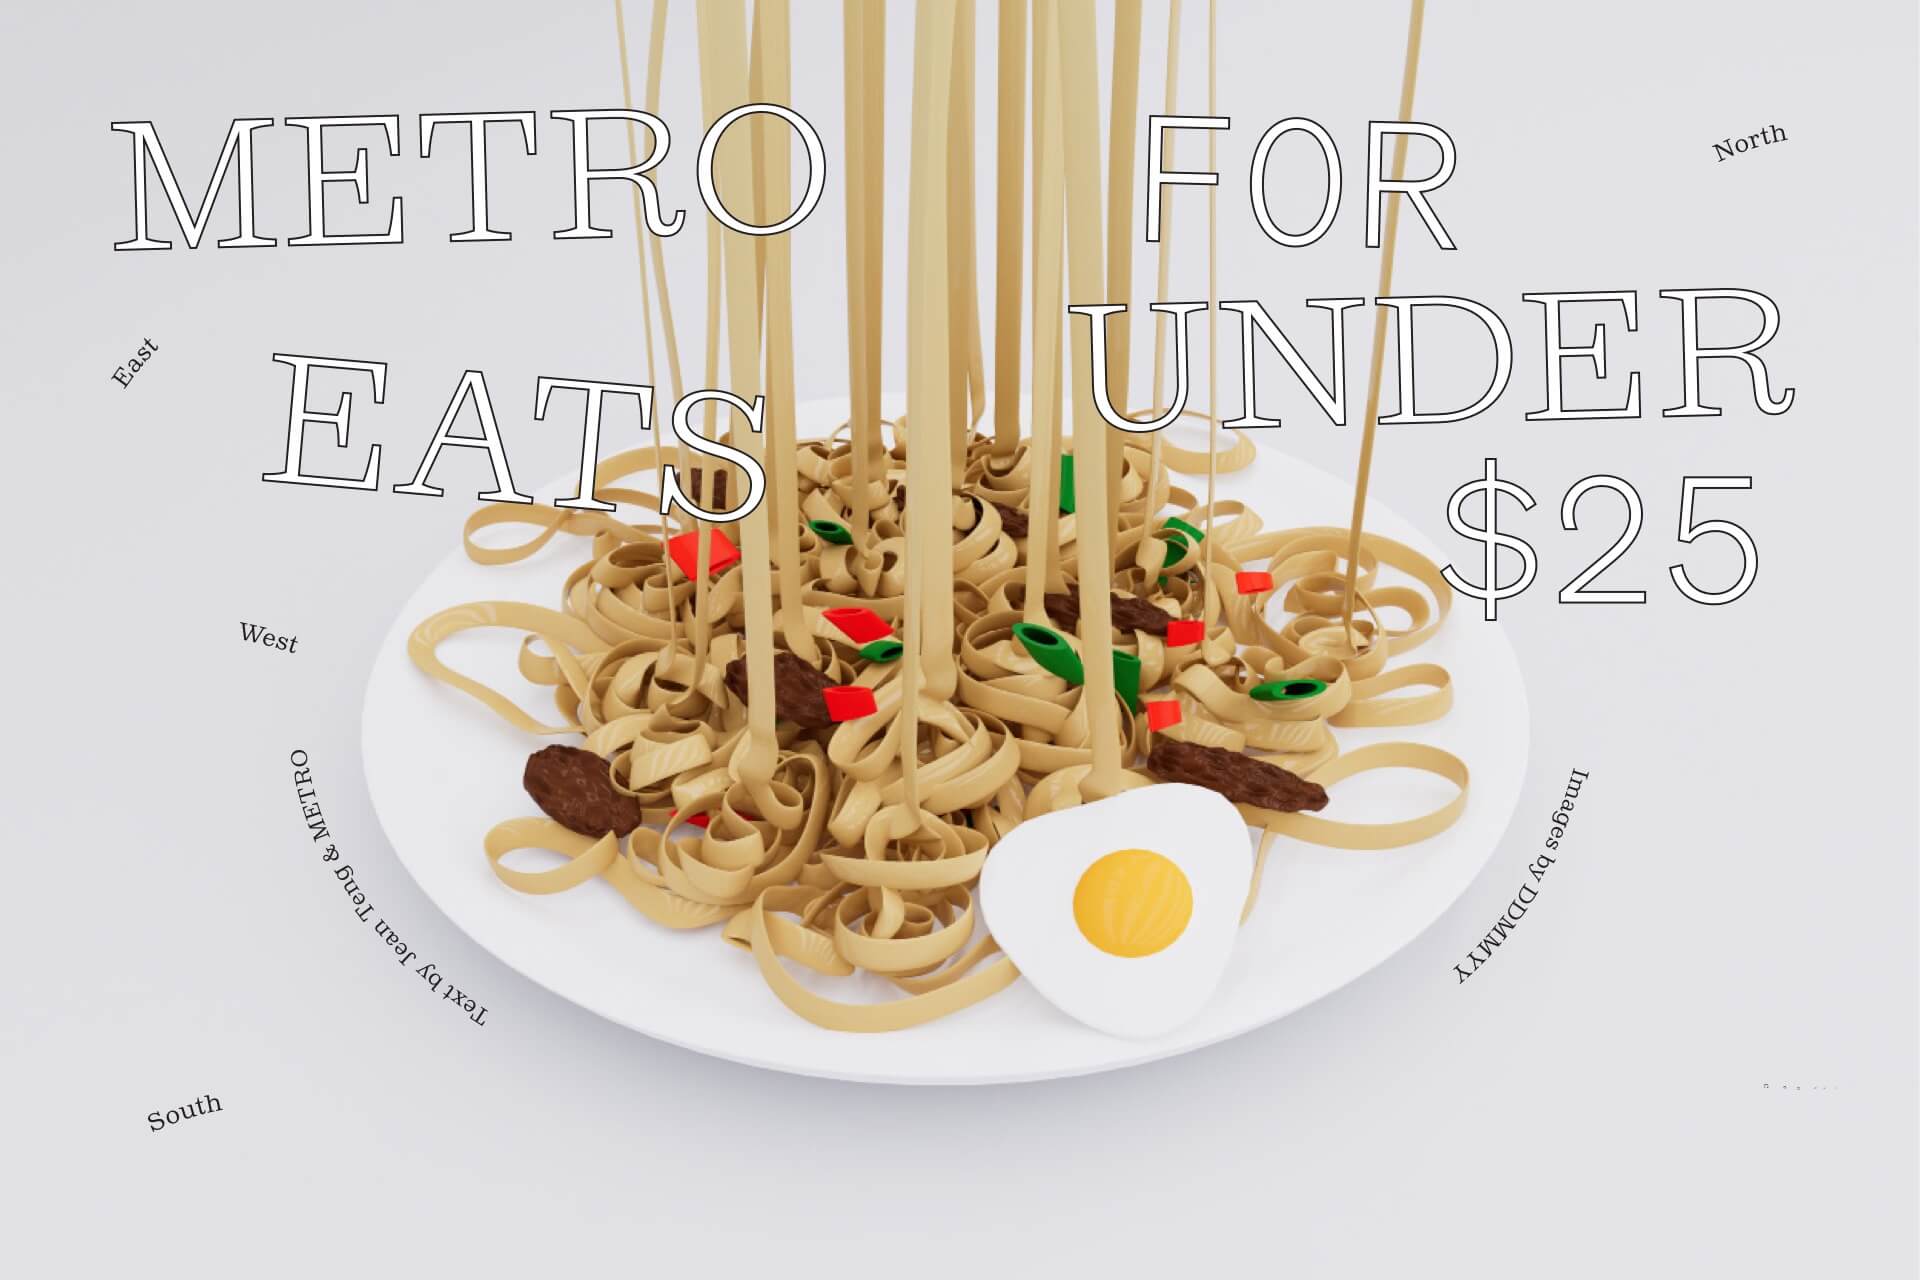 Metro Eats (for under $25)